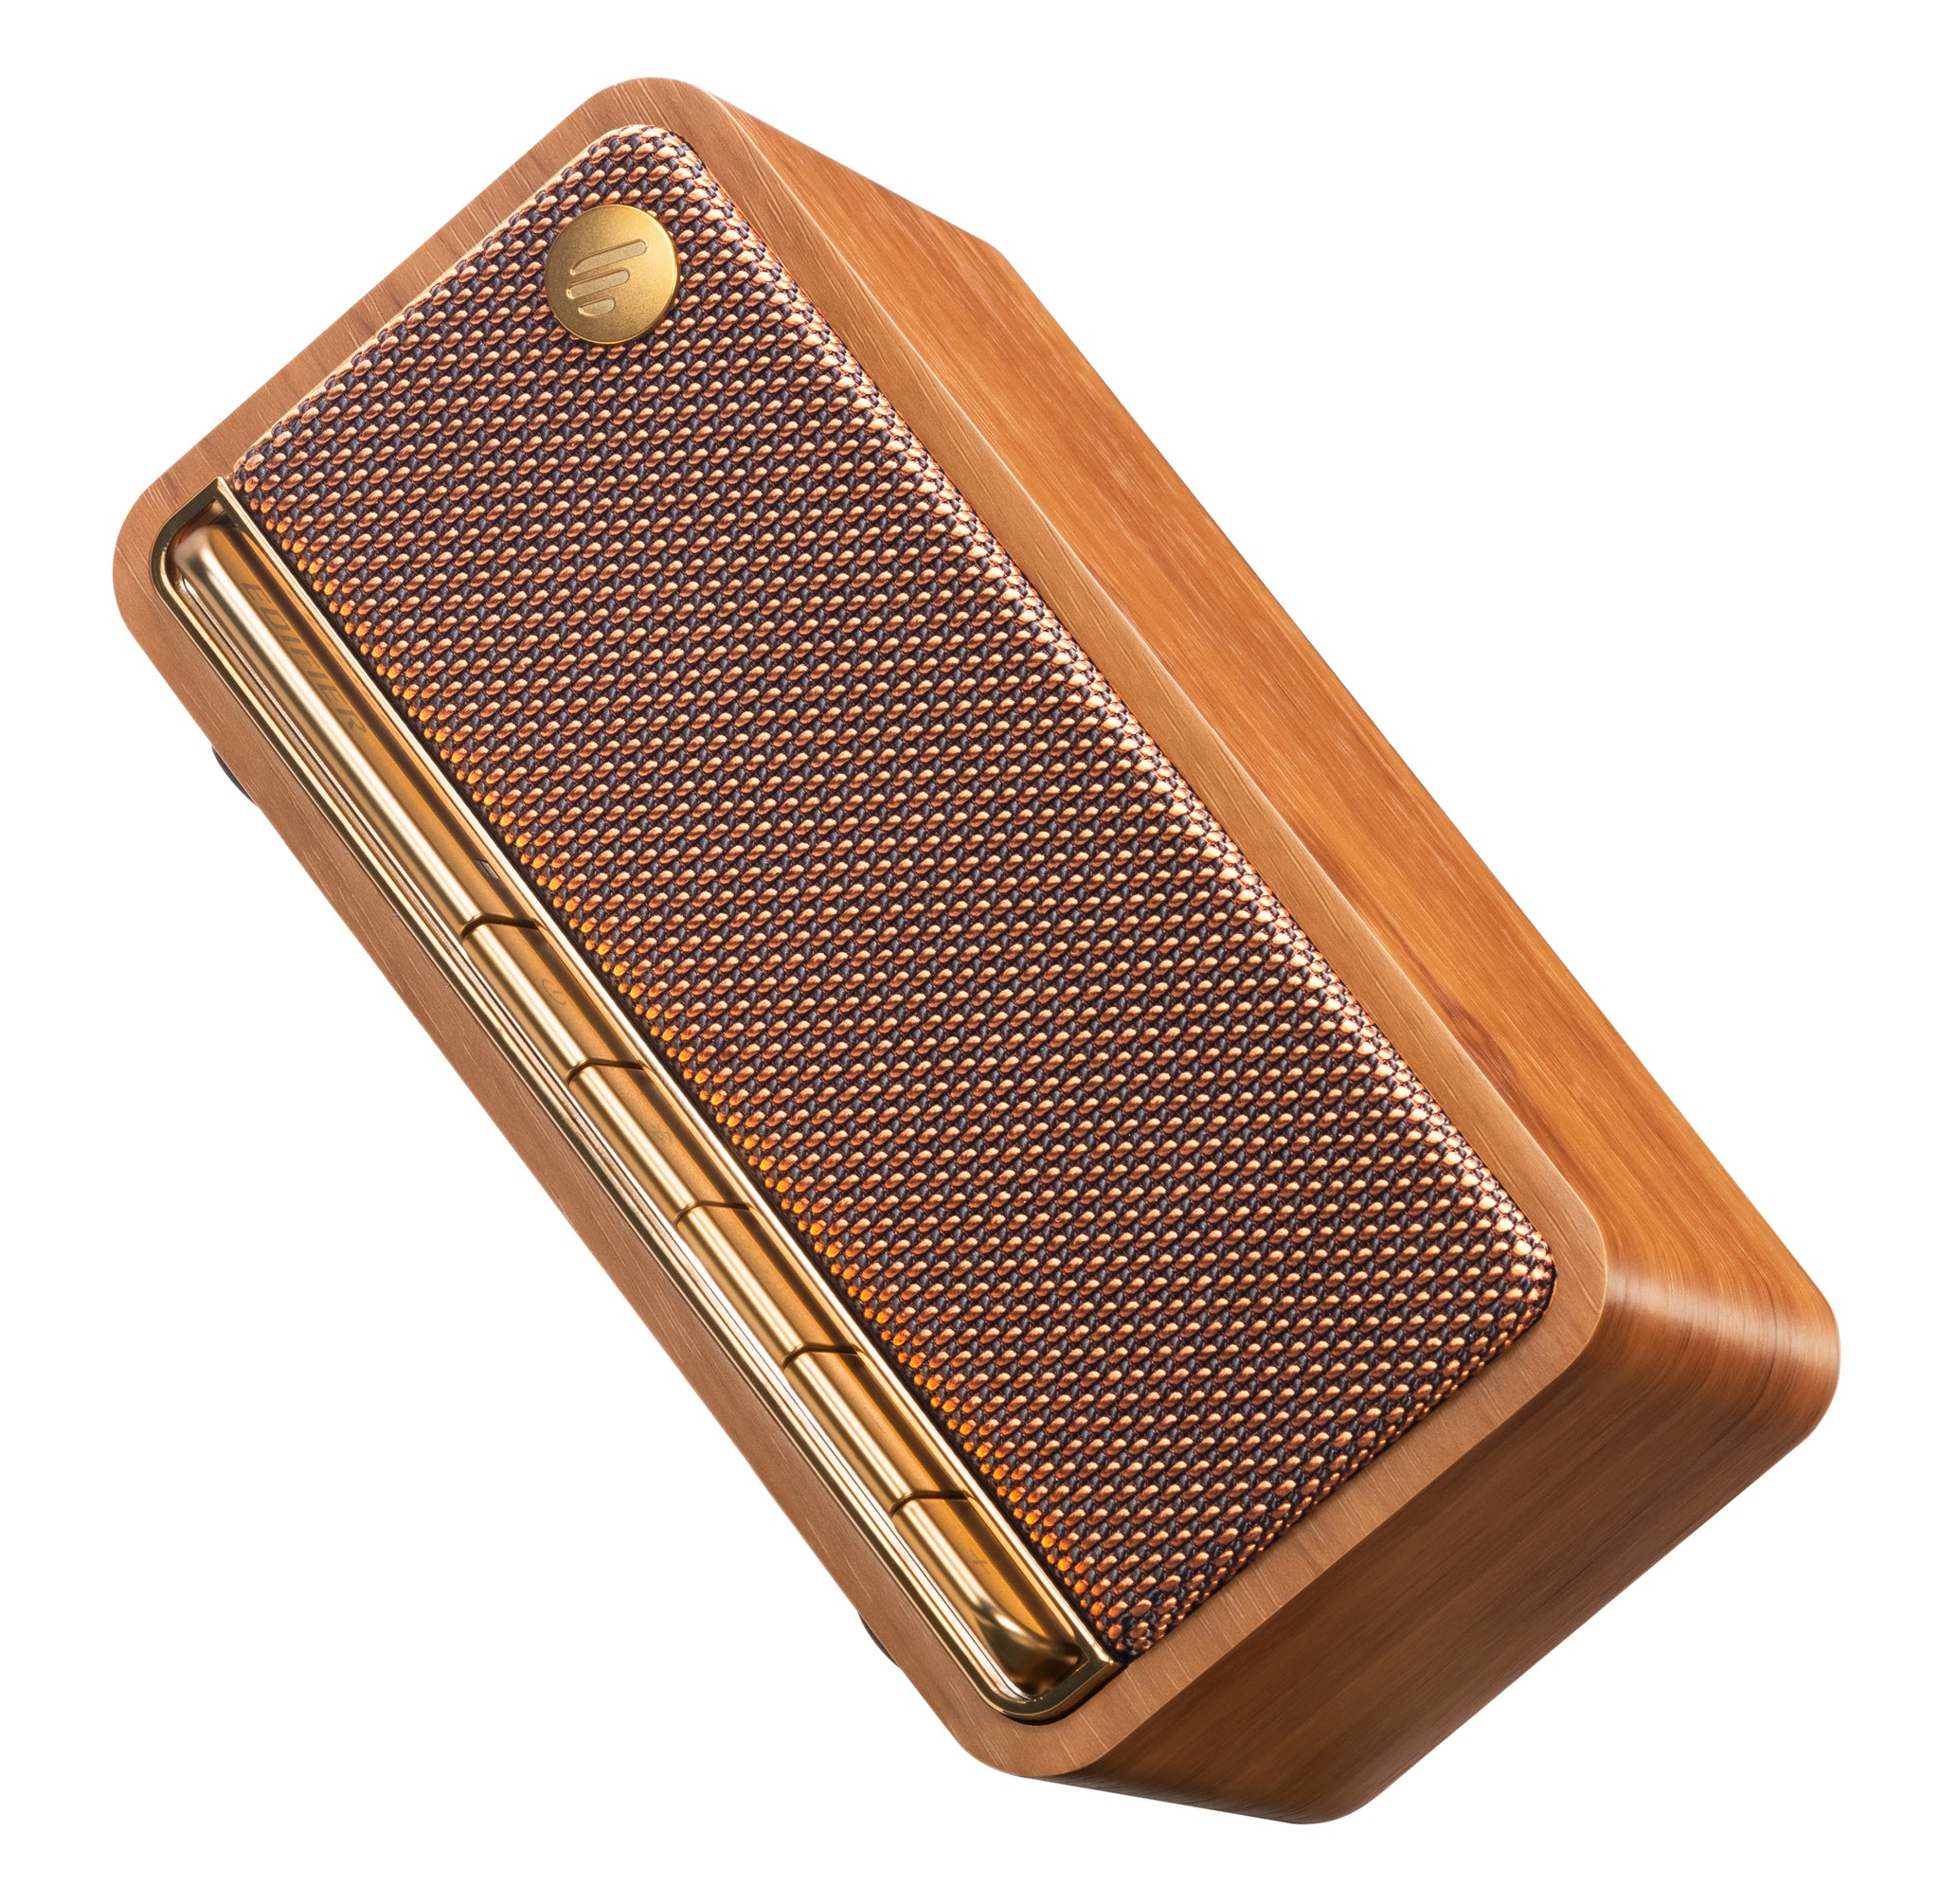 Edifier MP230 Retro Portable Bluetooth Speaker - Brown